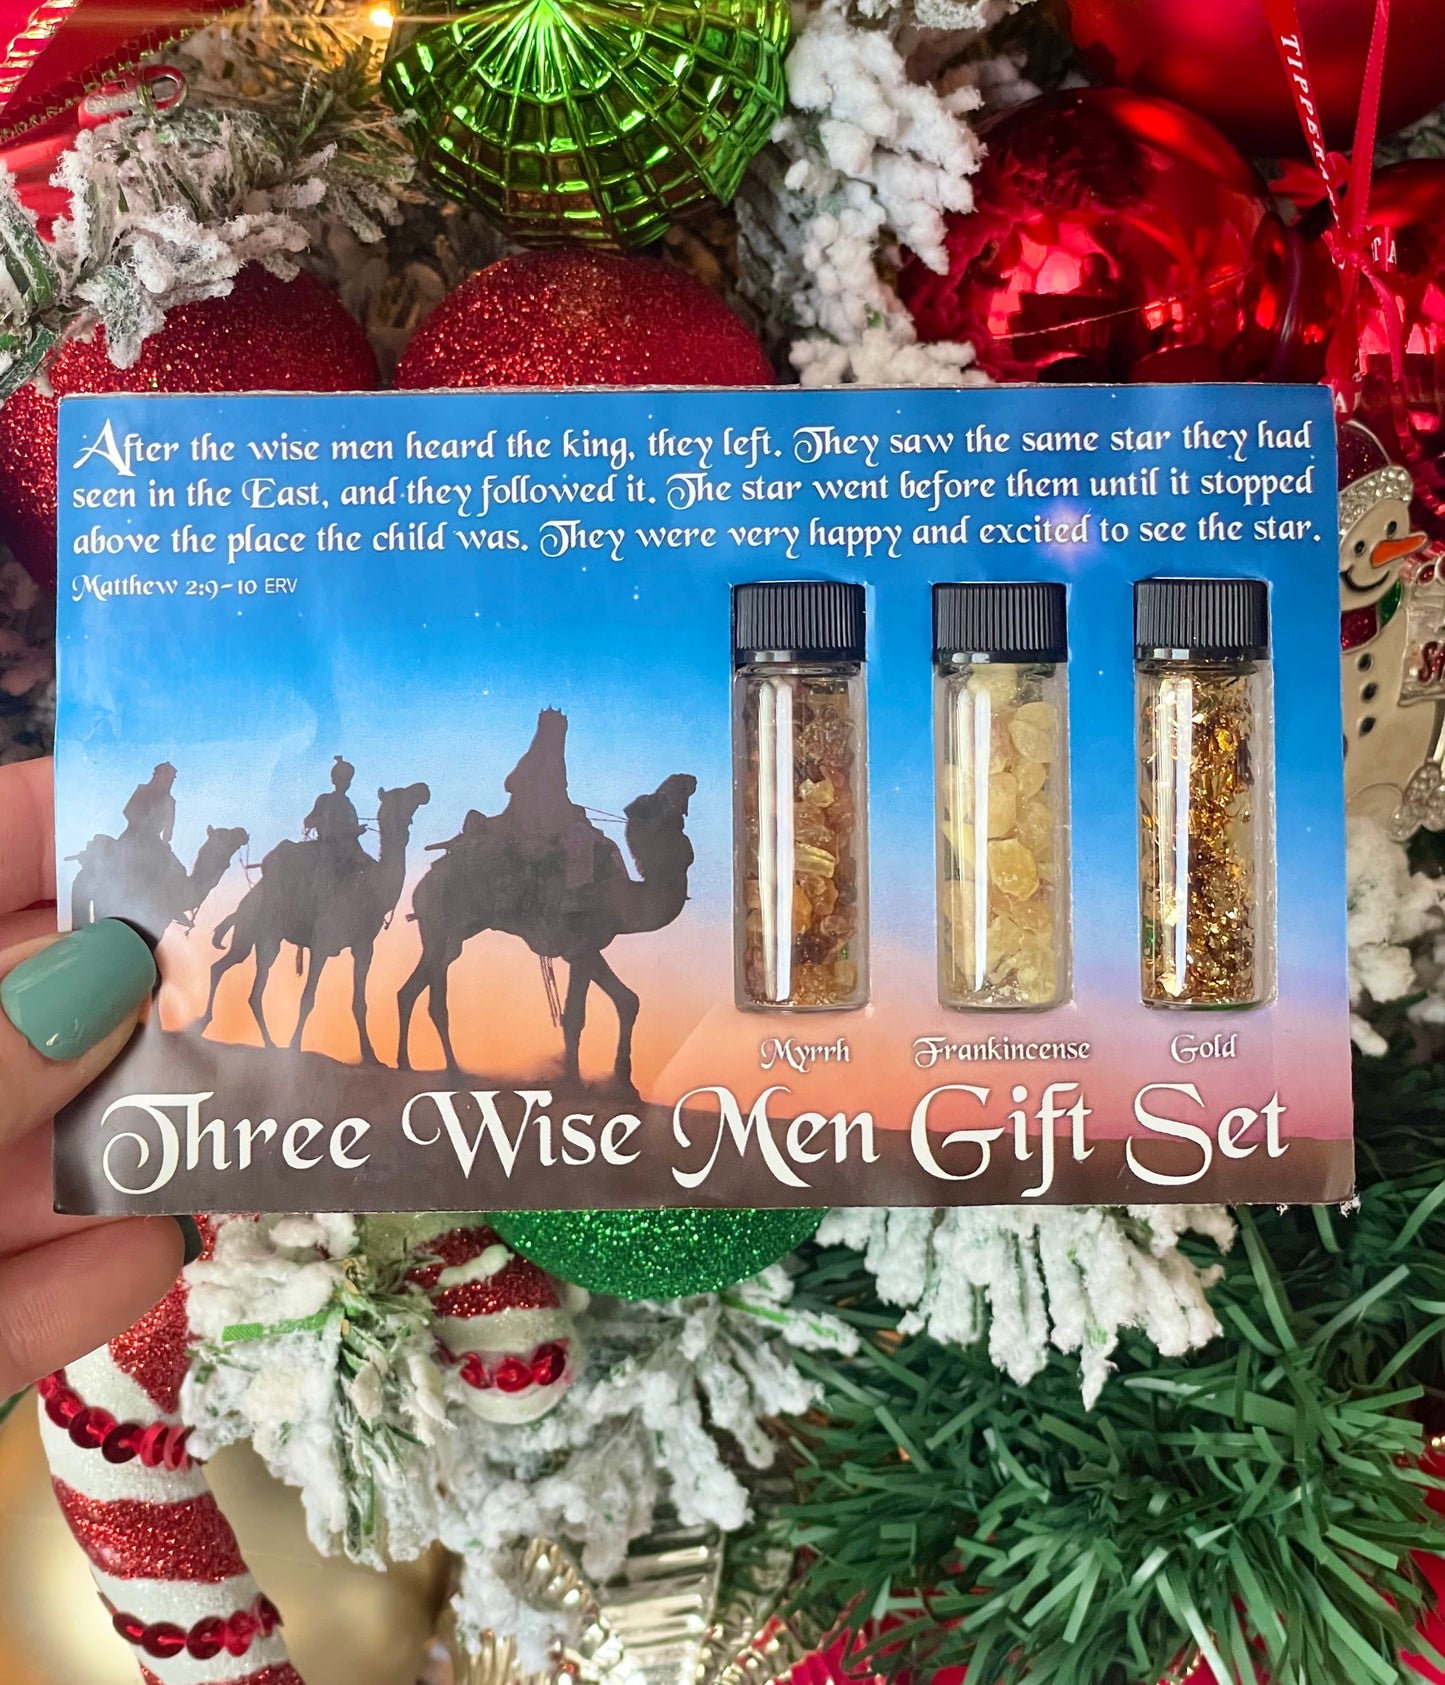 Three Wise Men Nativity Gift Set - Gold, Frankincense, Myrrh - Great Bible-Based Christian Christmas Gift!